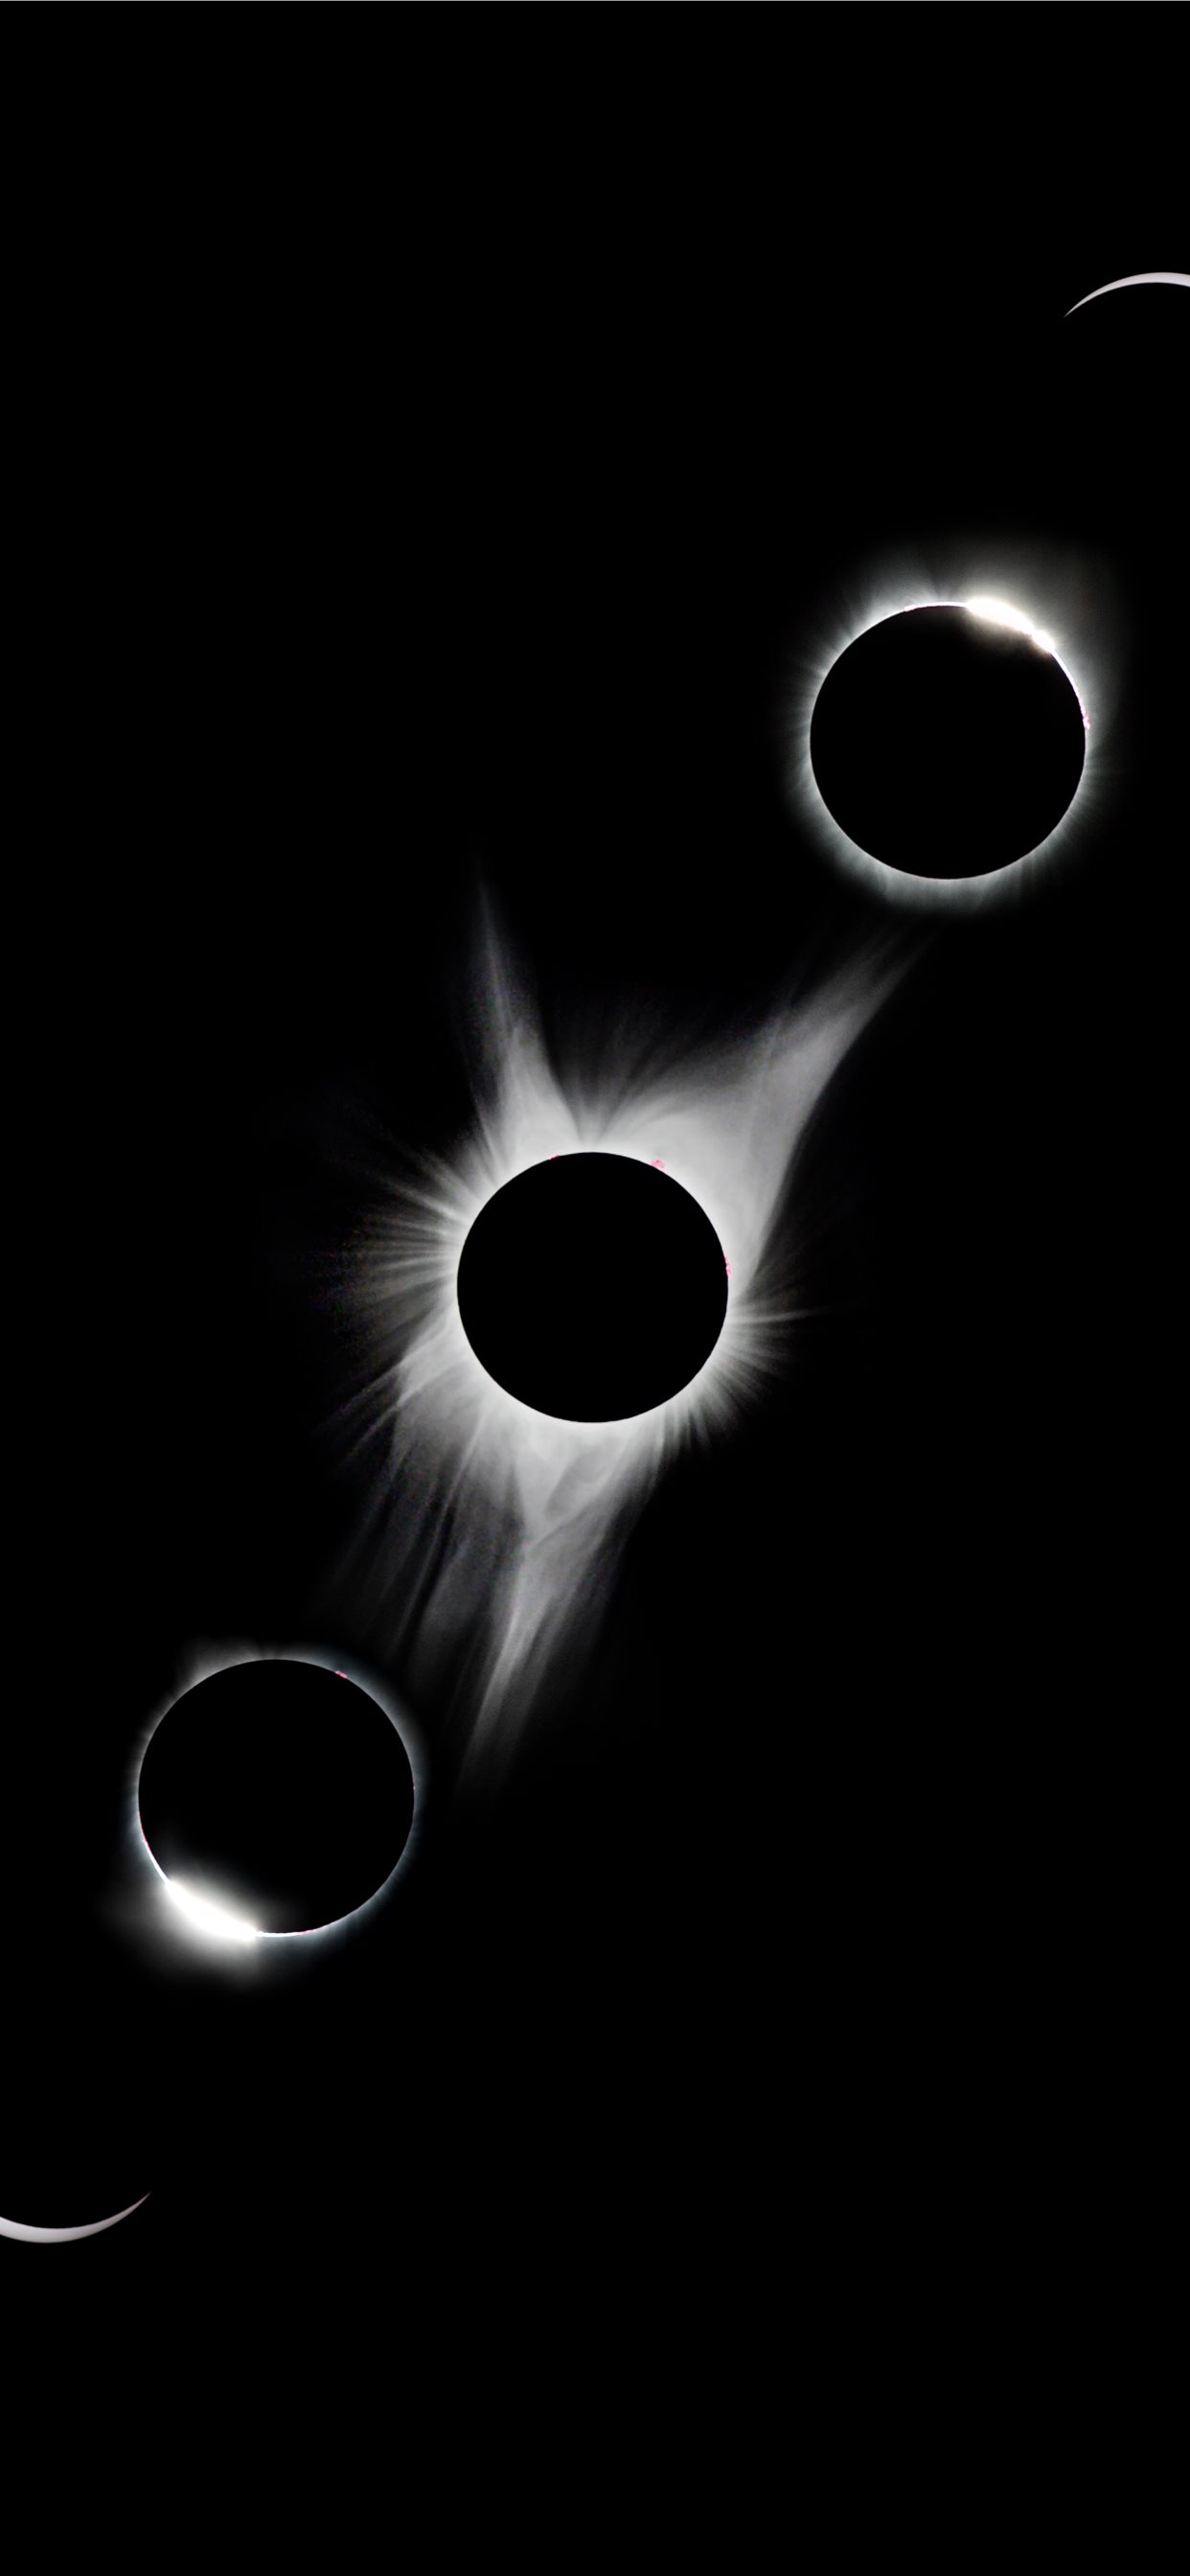 Moon Eclipse Art IPhone Wallpaper  IPhone Wallpapers